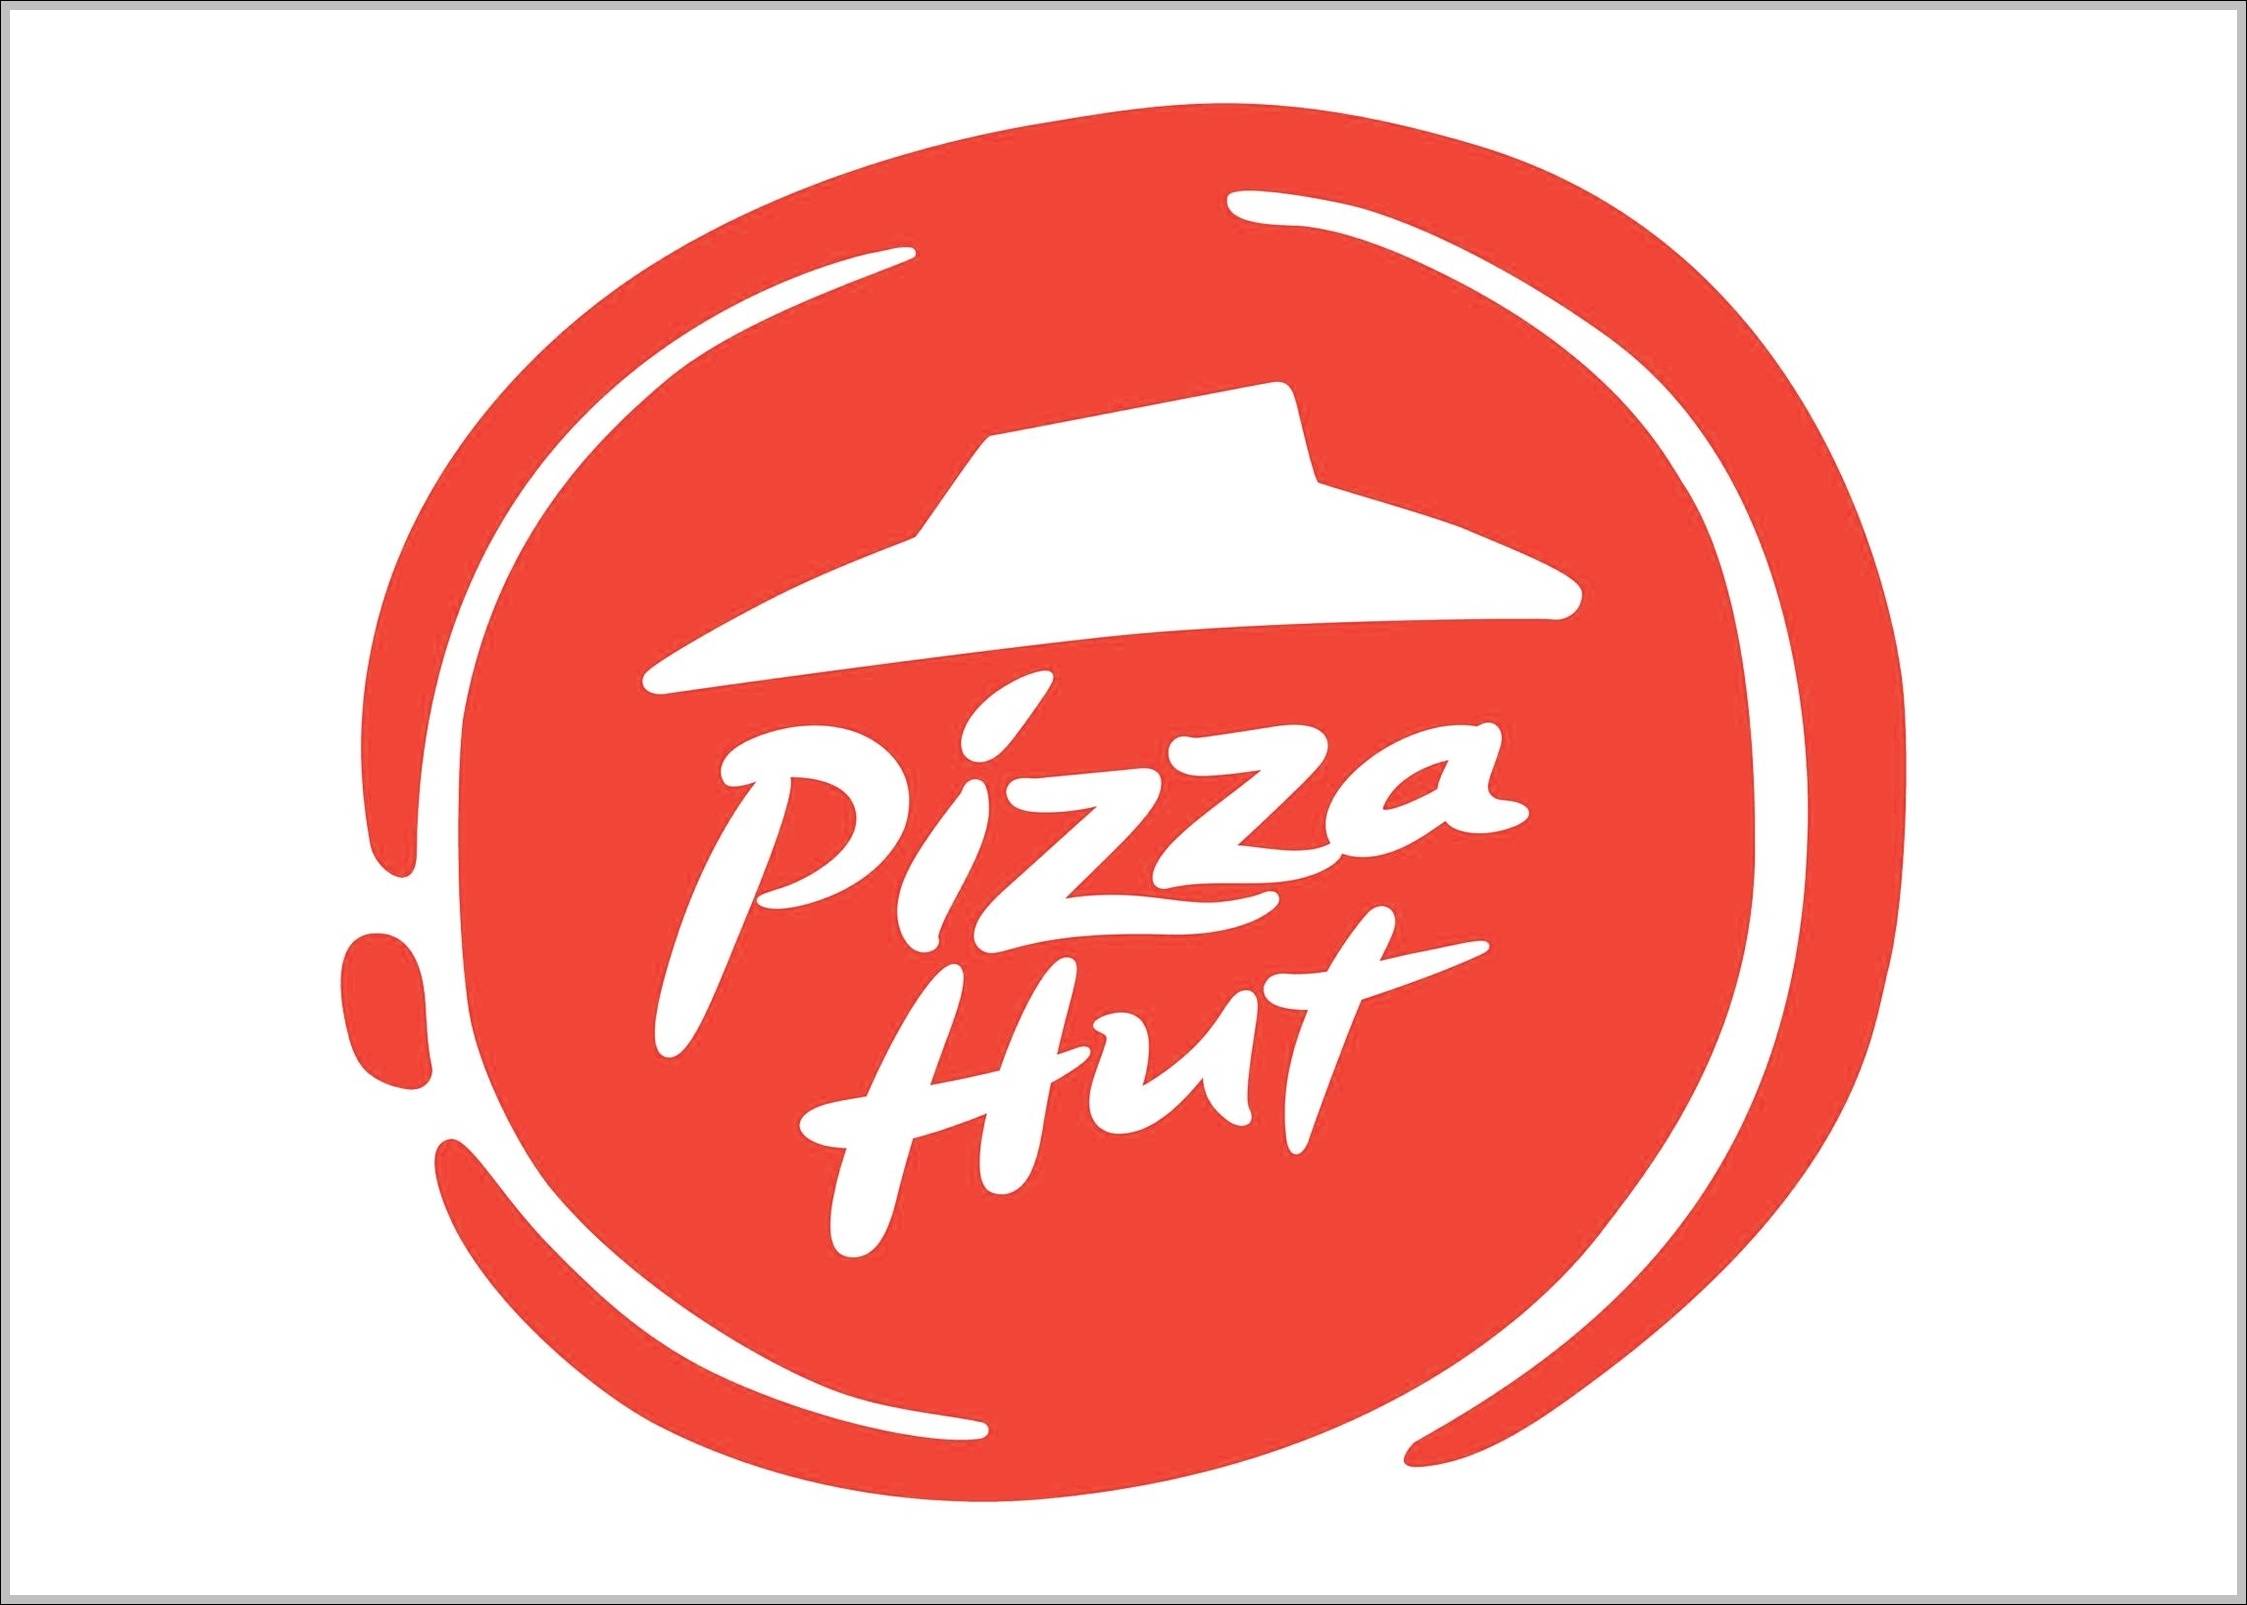 PizzaHut logo 2014